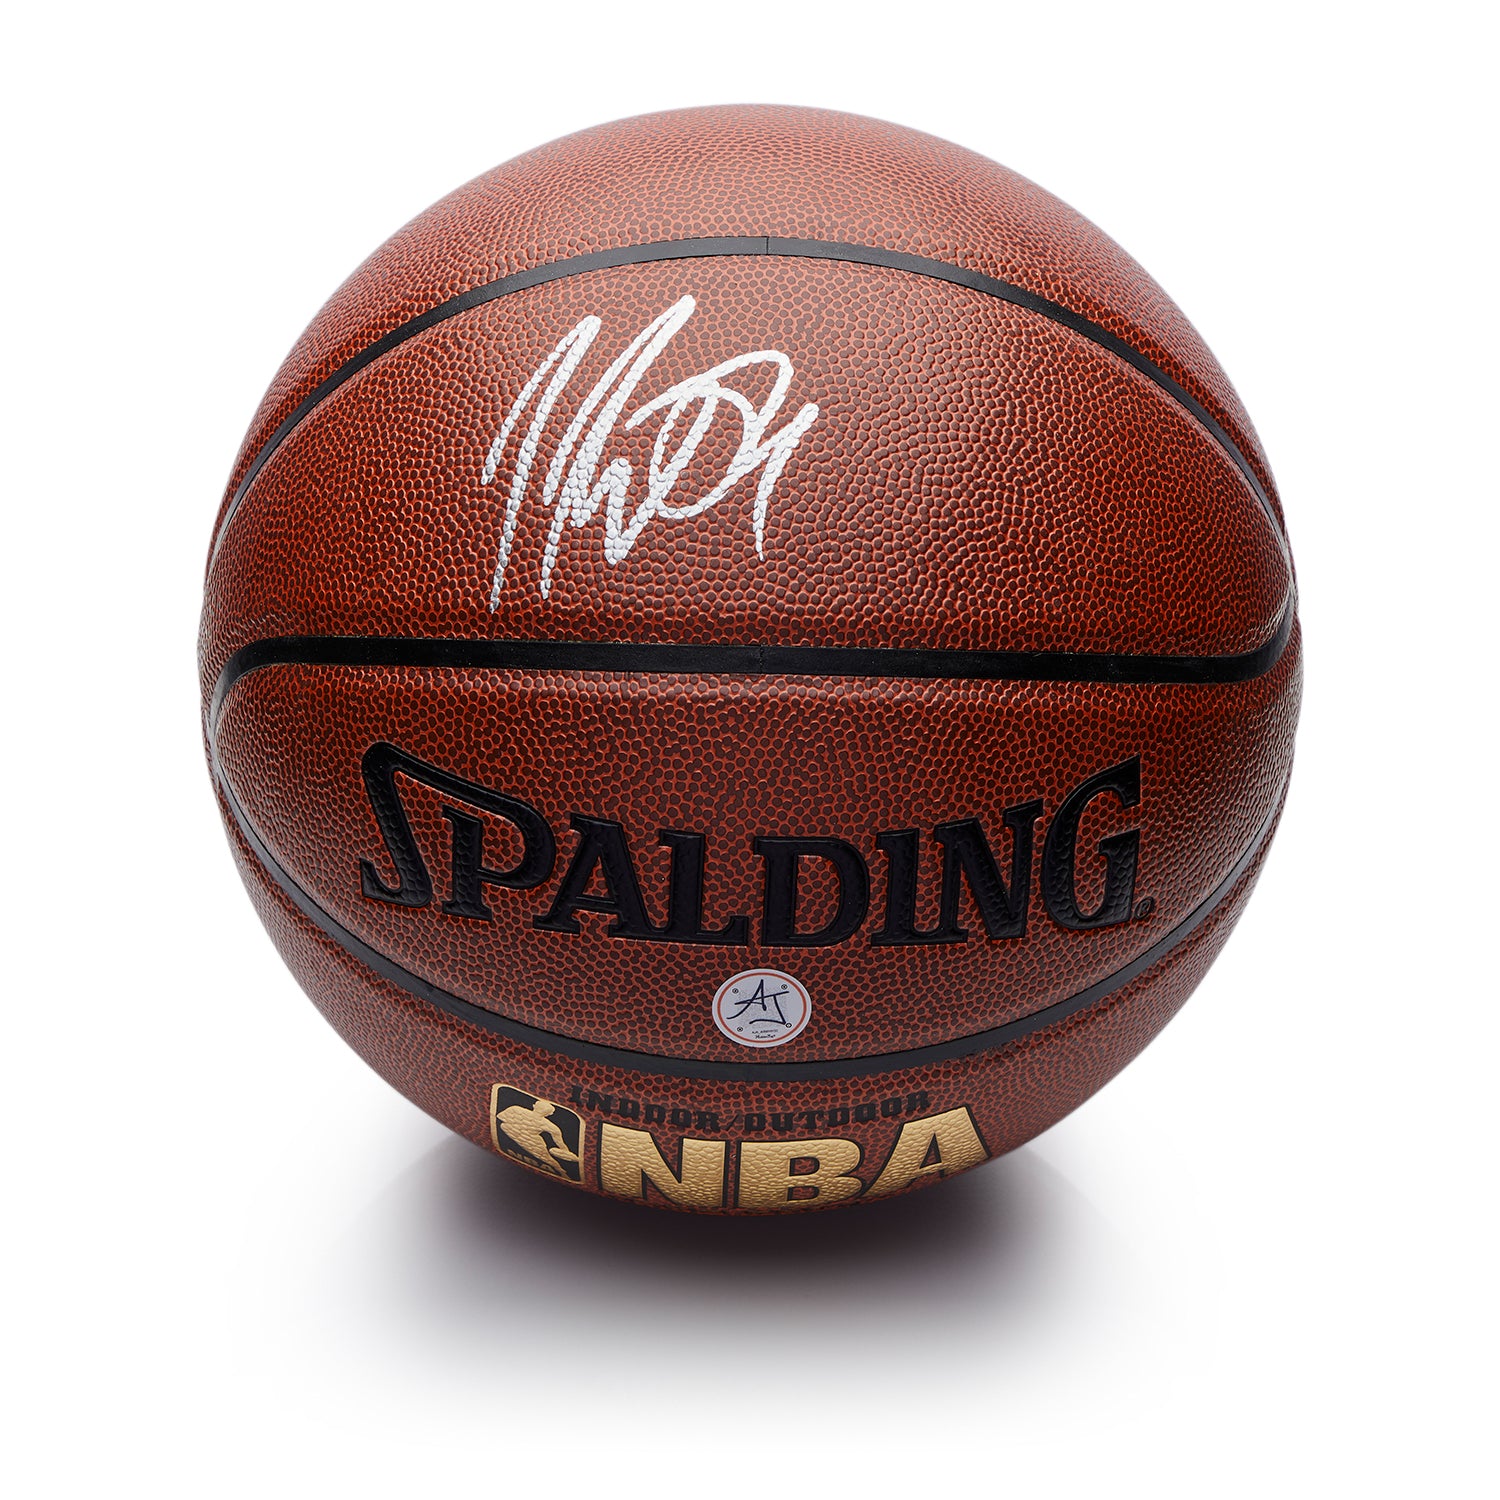 Patrick Patterson Autographed Spalding NBA I/O Basketball